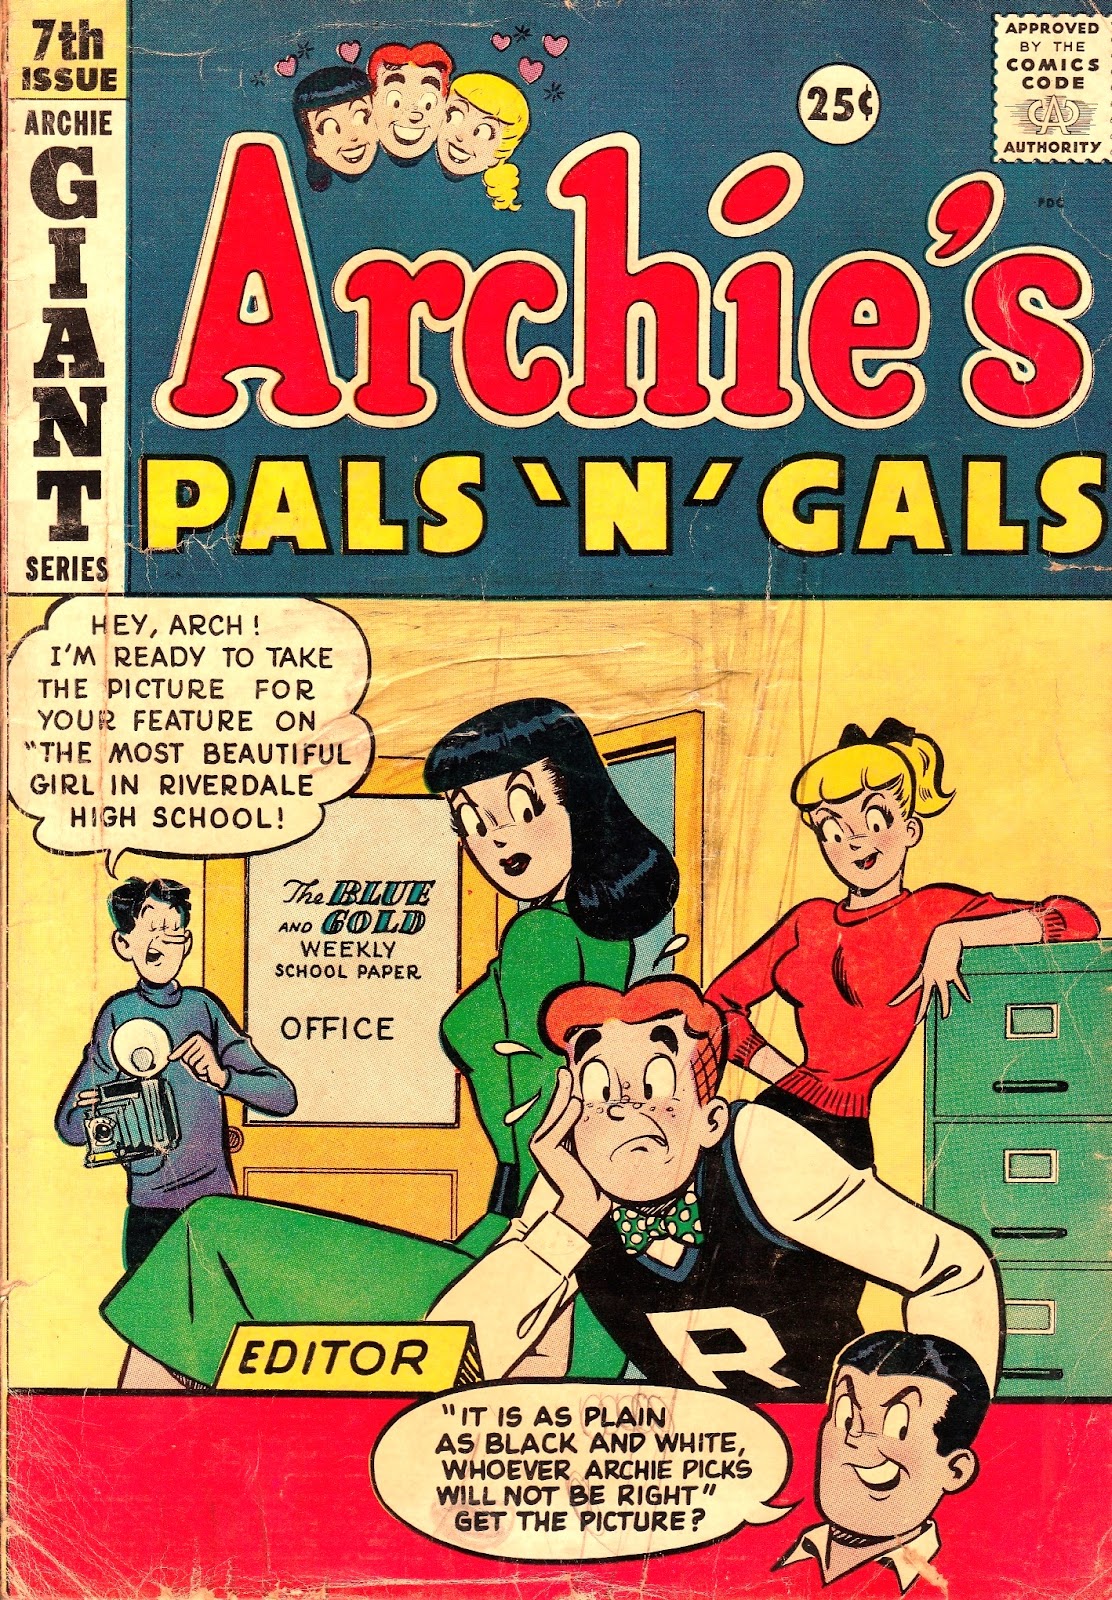 Archie's Pals 'N' Gals 7 Page 1